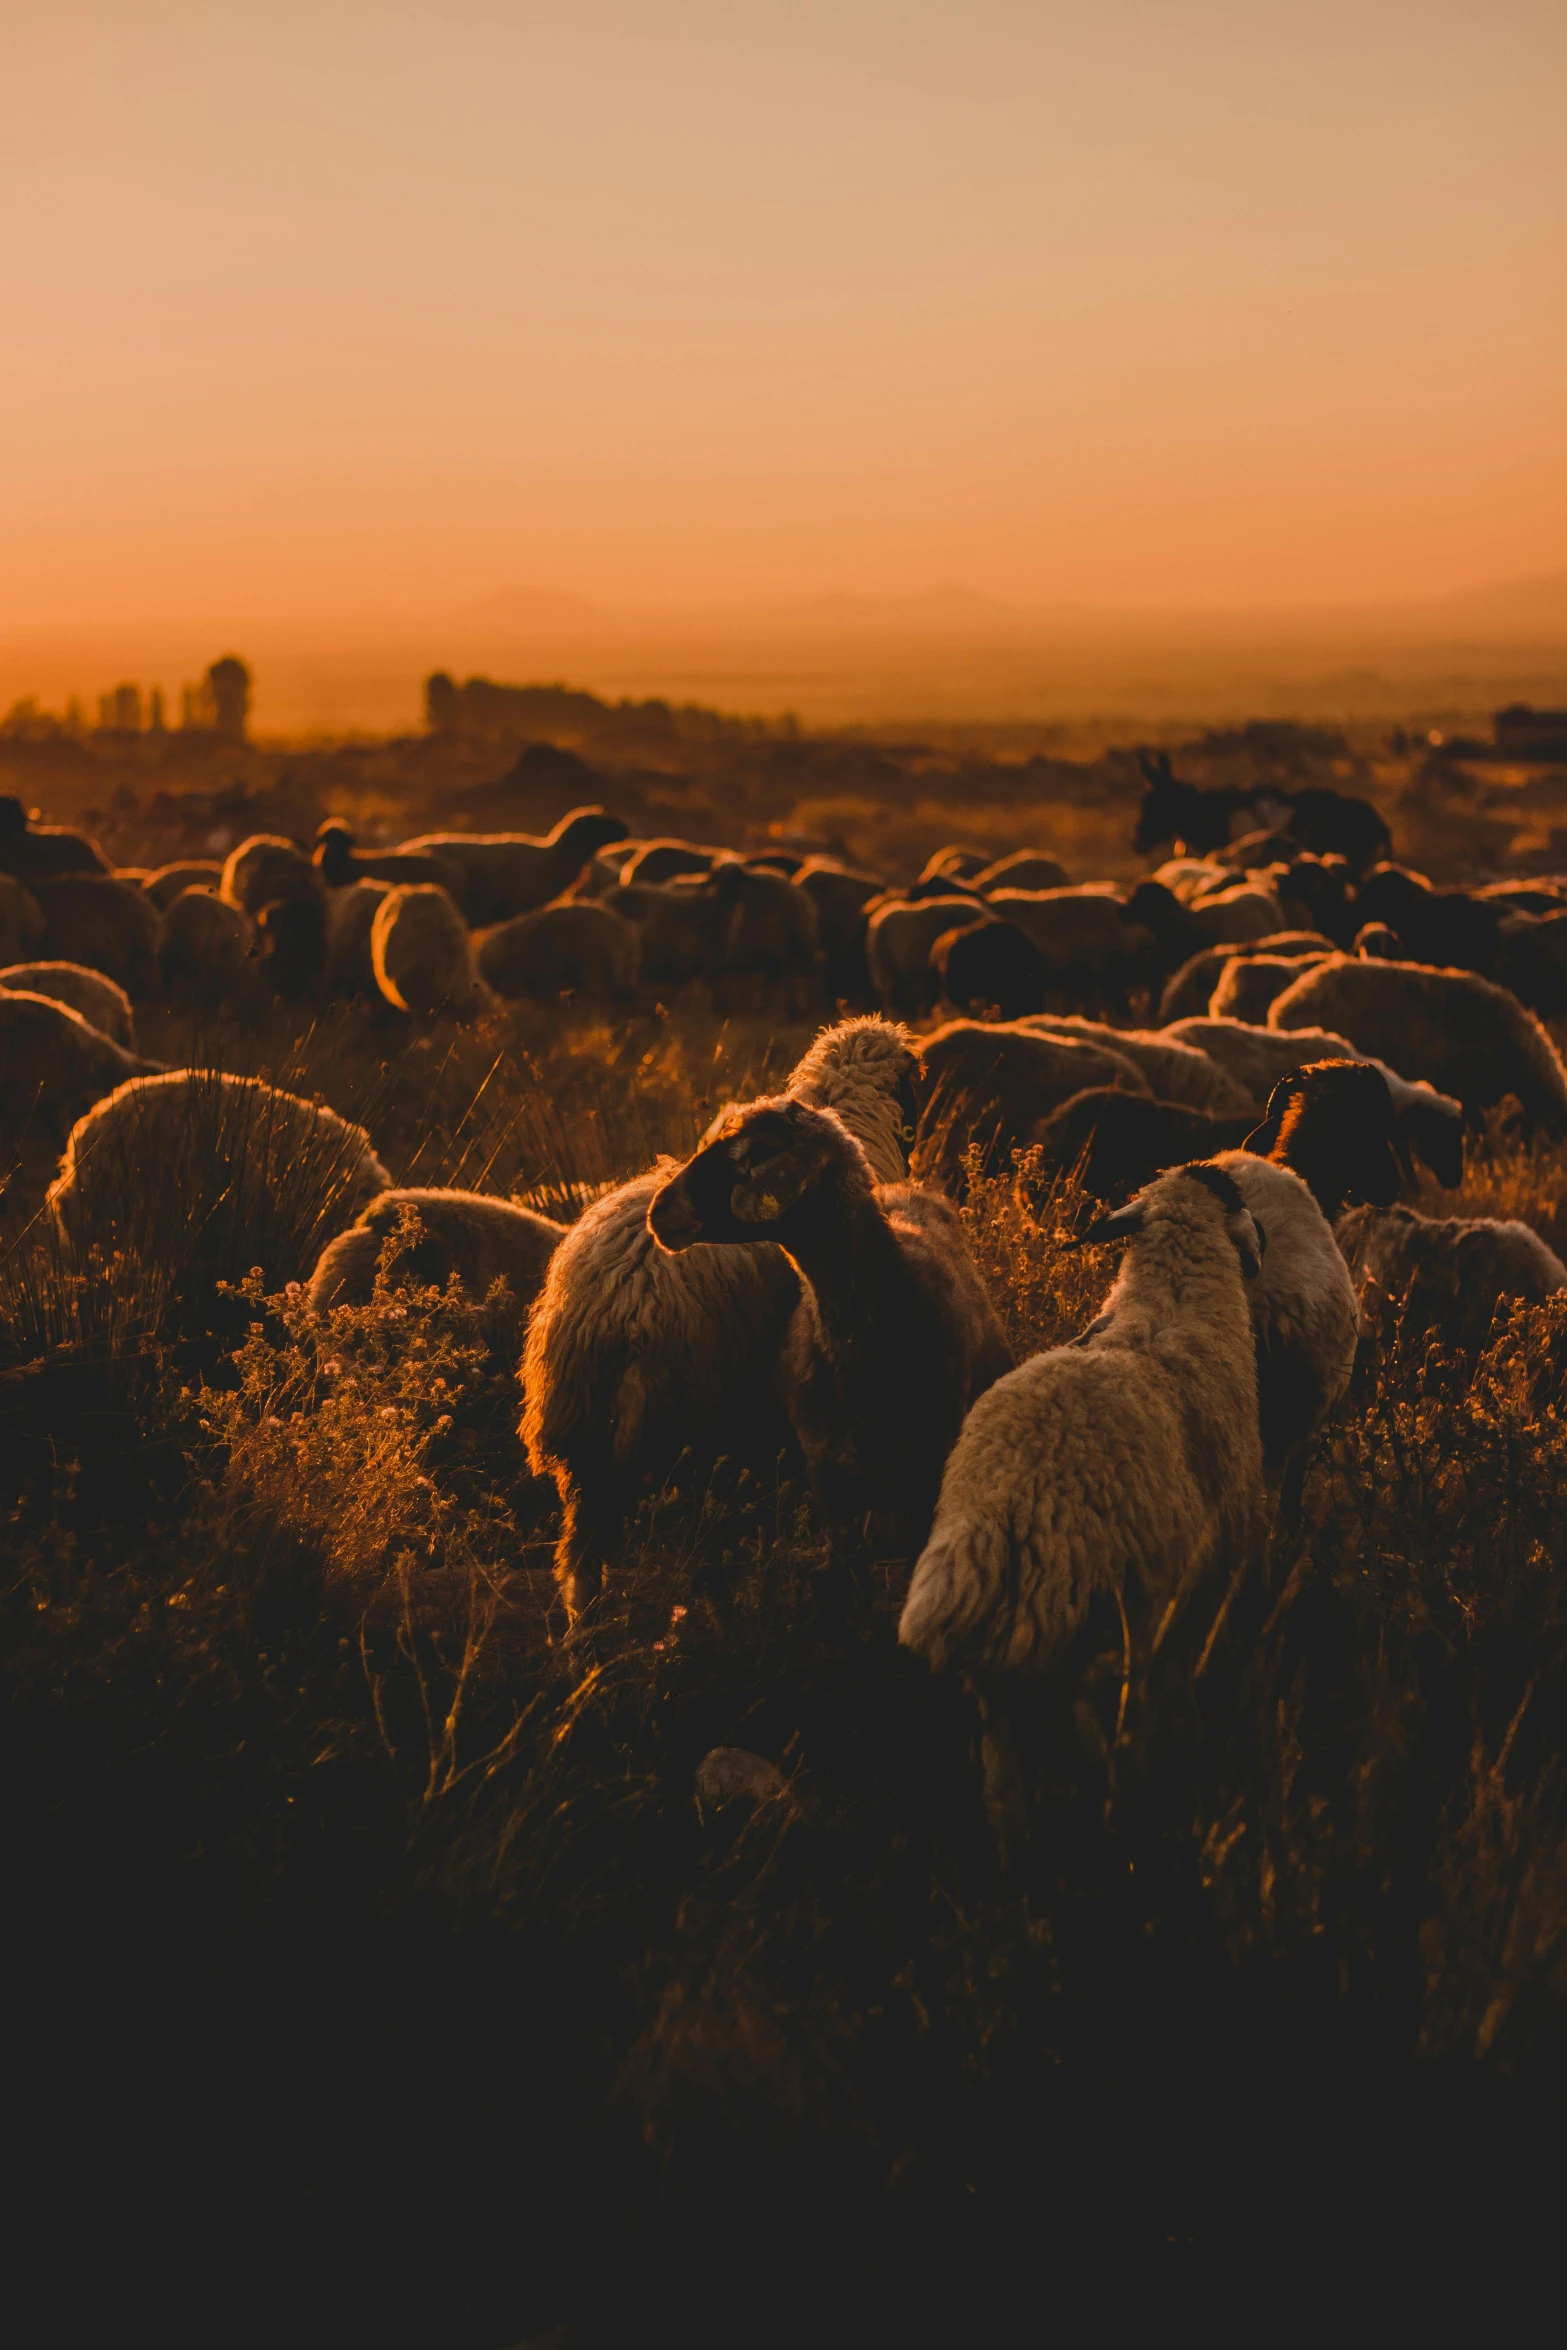 a herd of sheep walking through a grass covered field